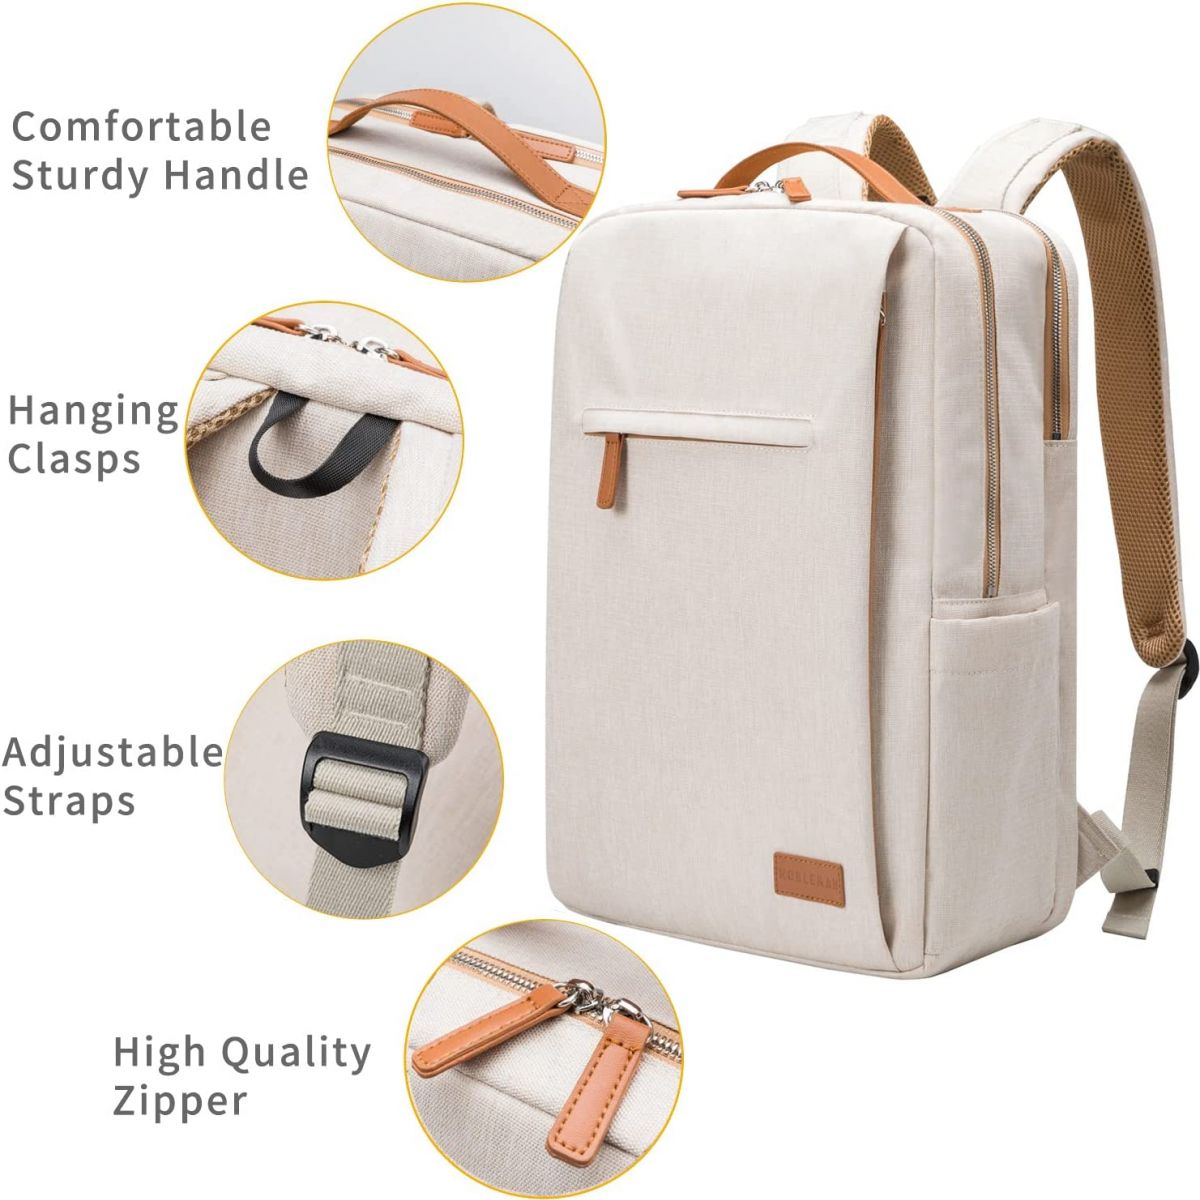 Backpack beige